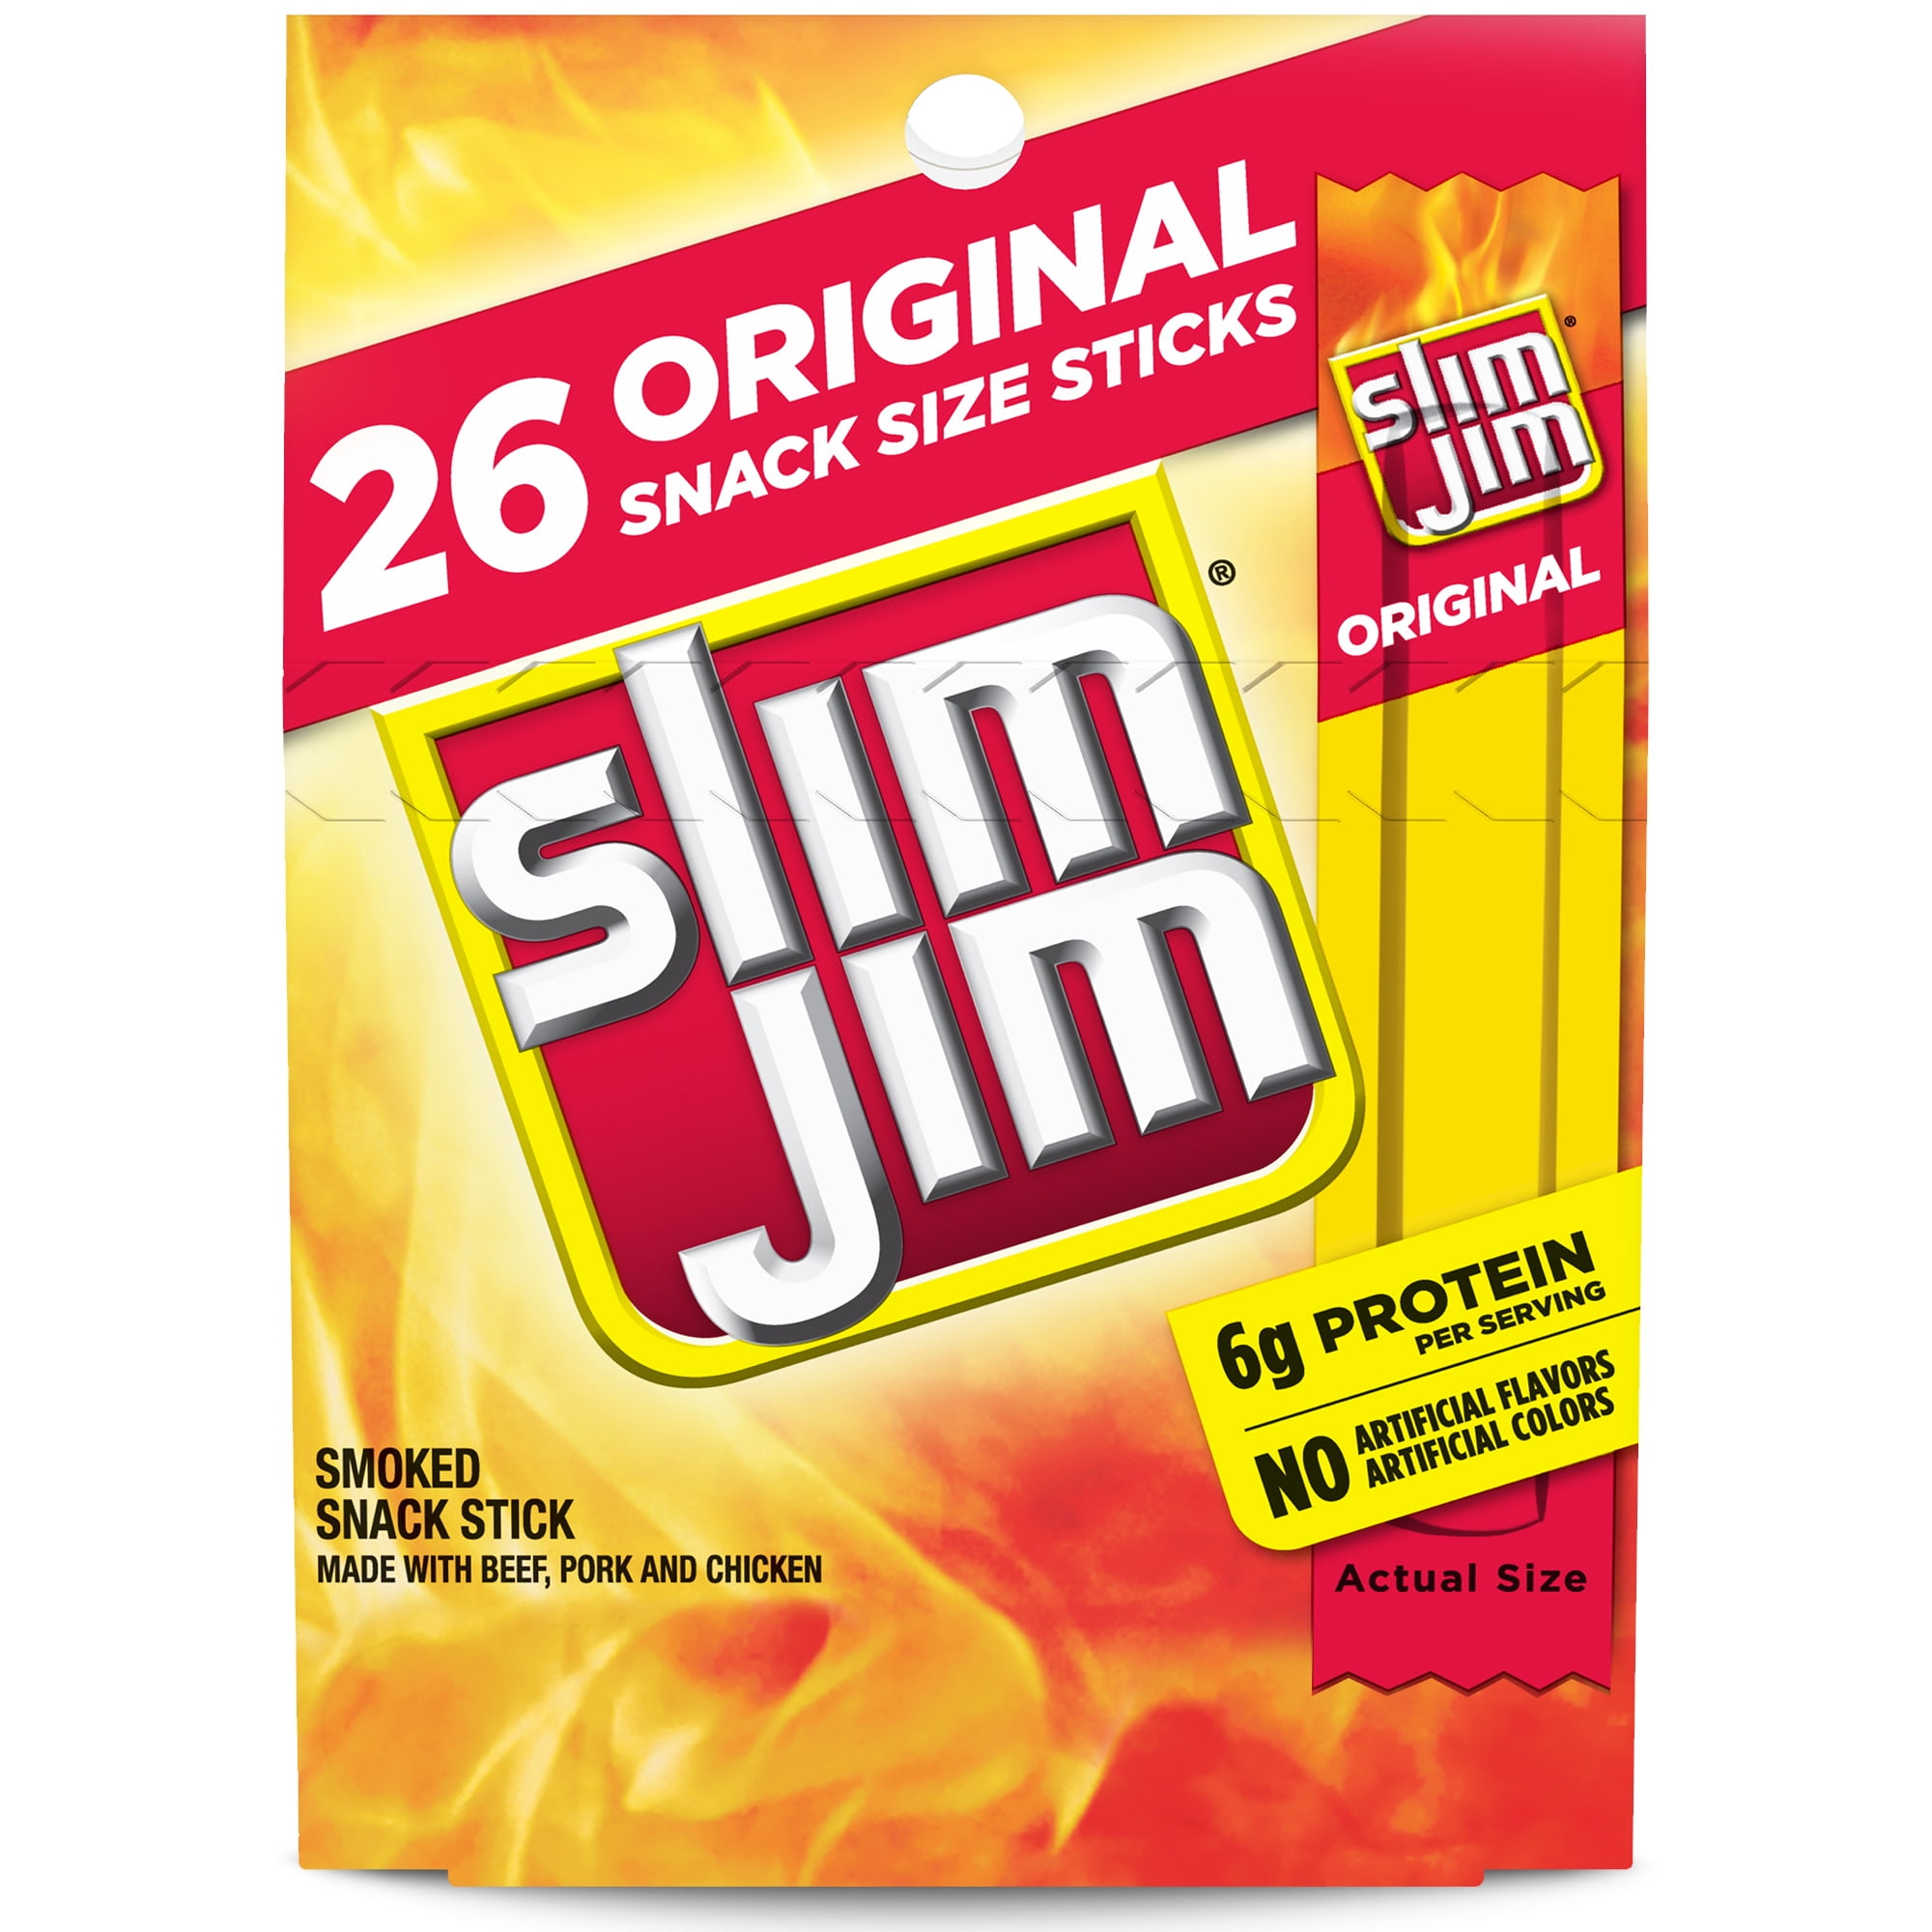 Slim Jim Original Snack Size Stick 0.28 oz Meat Snacks, 26 Count Box - Walmart.com